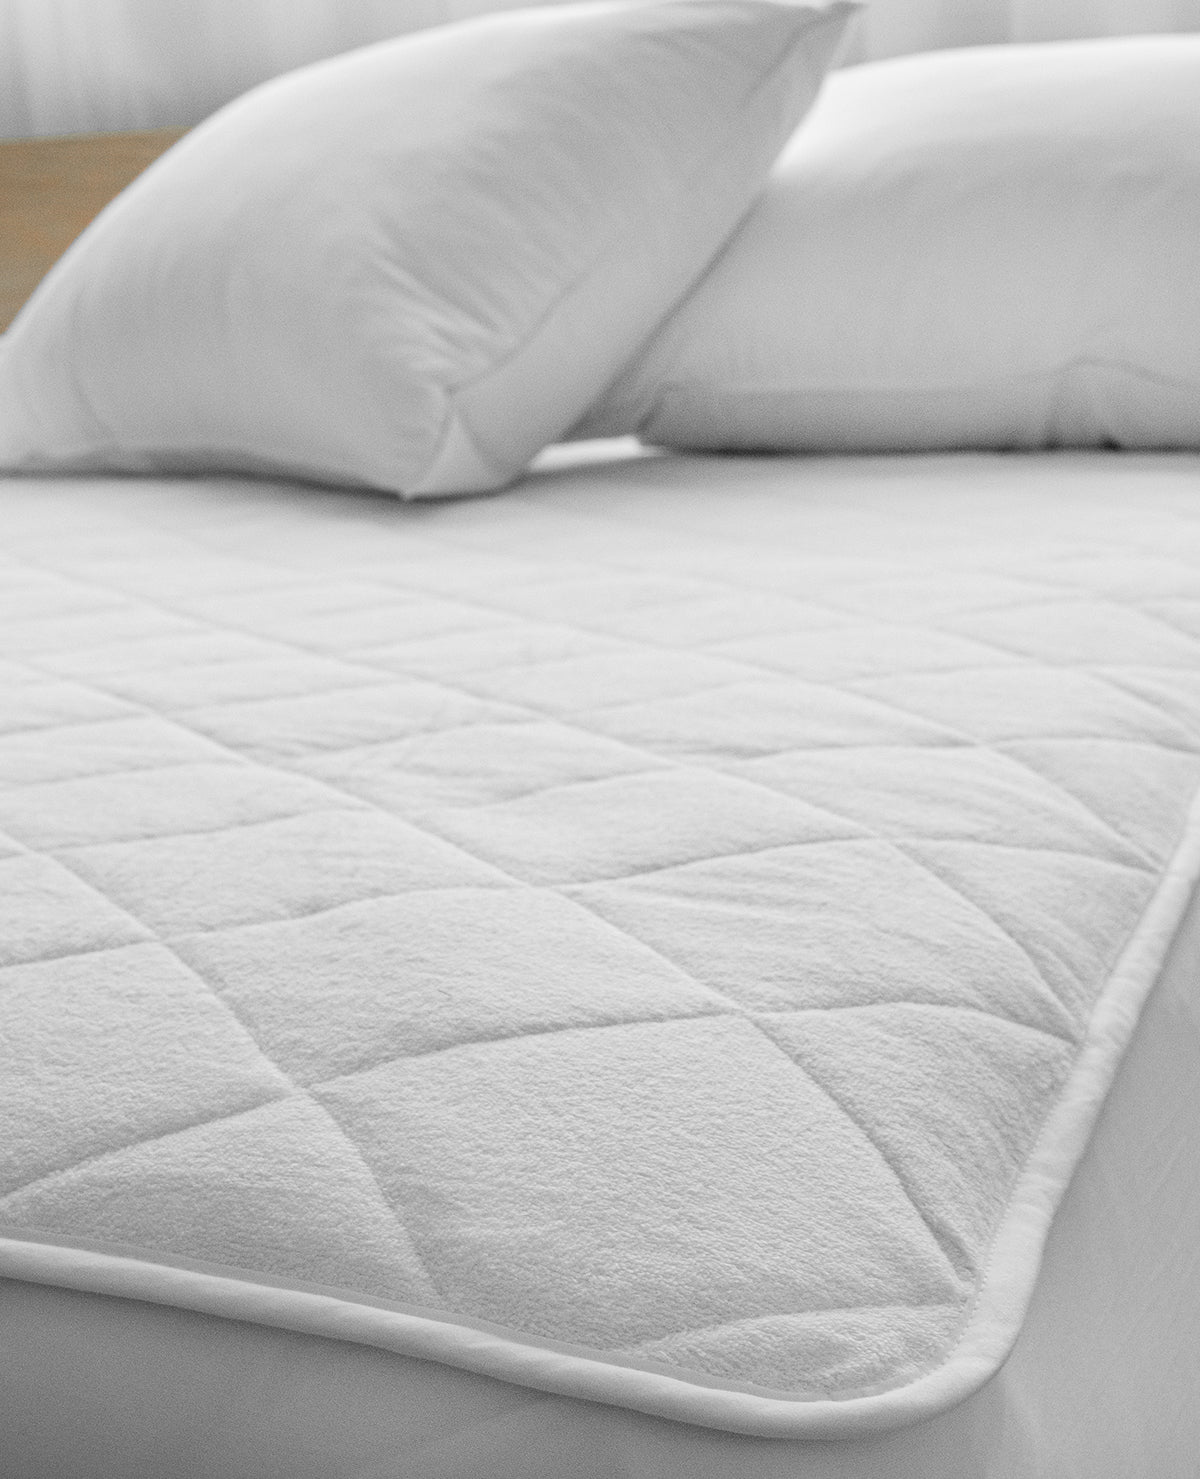 Protect-A-Bed Super Absorbent Premium Cotton Pillow Protectors